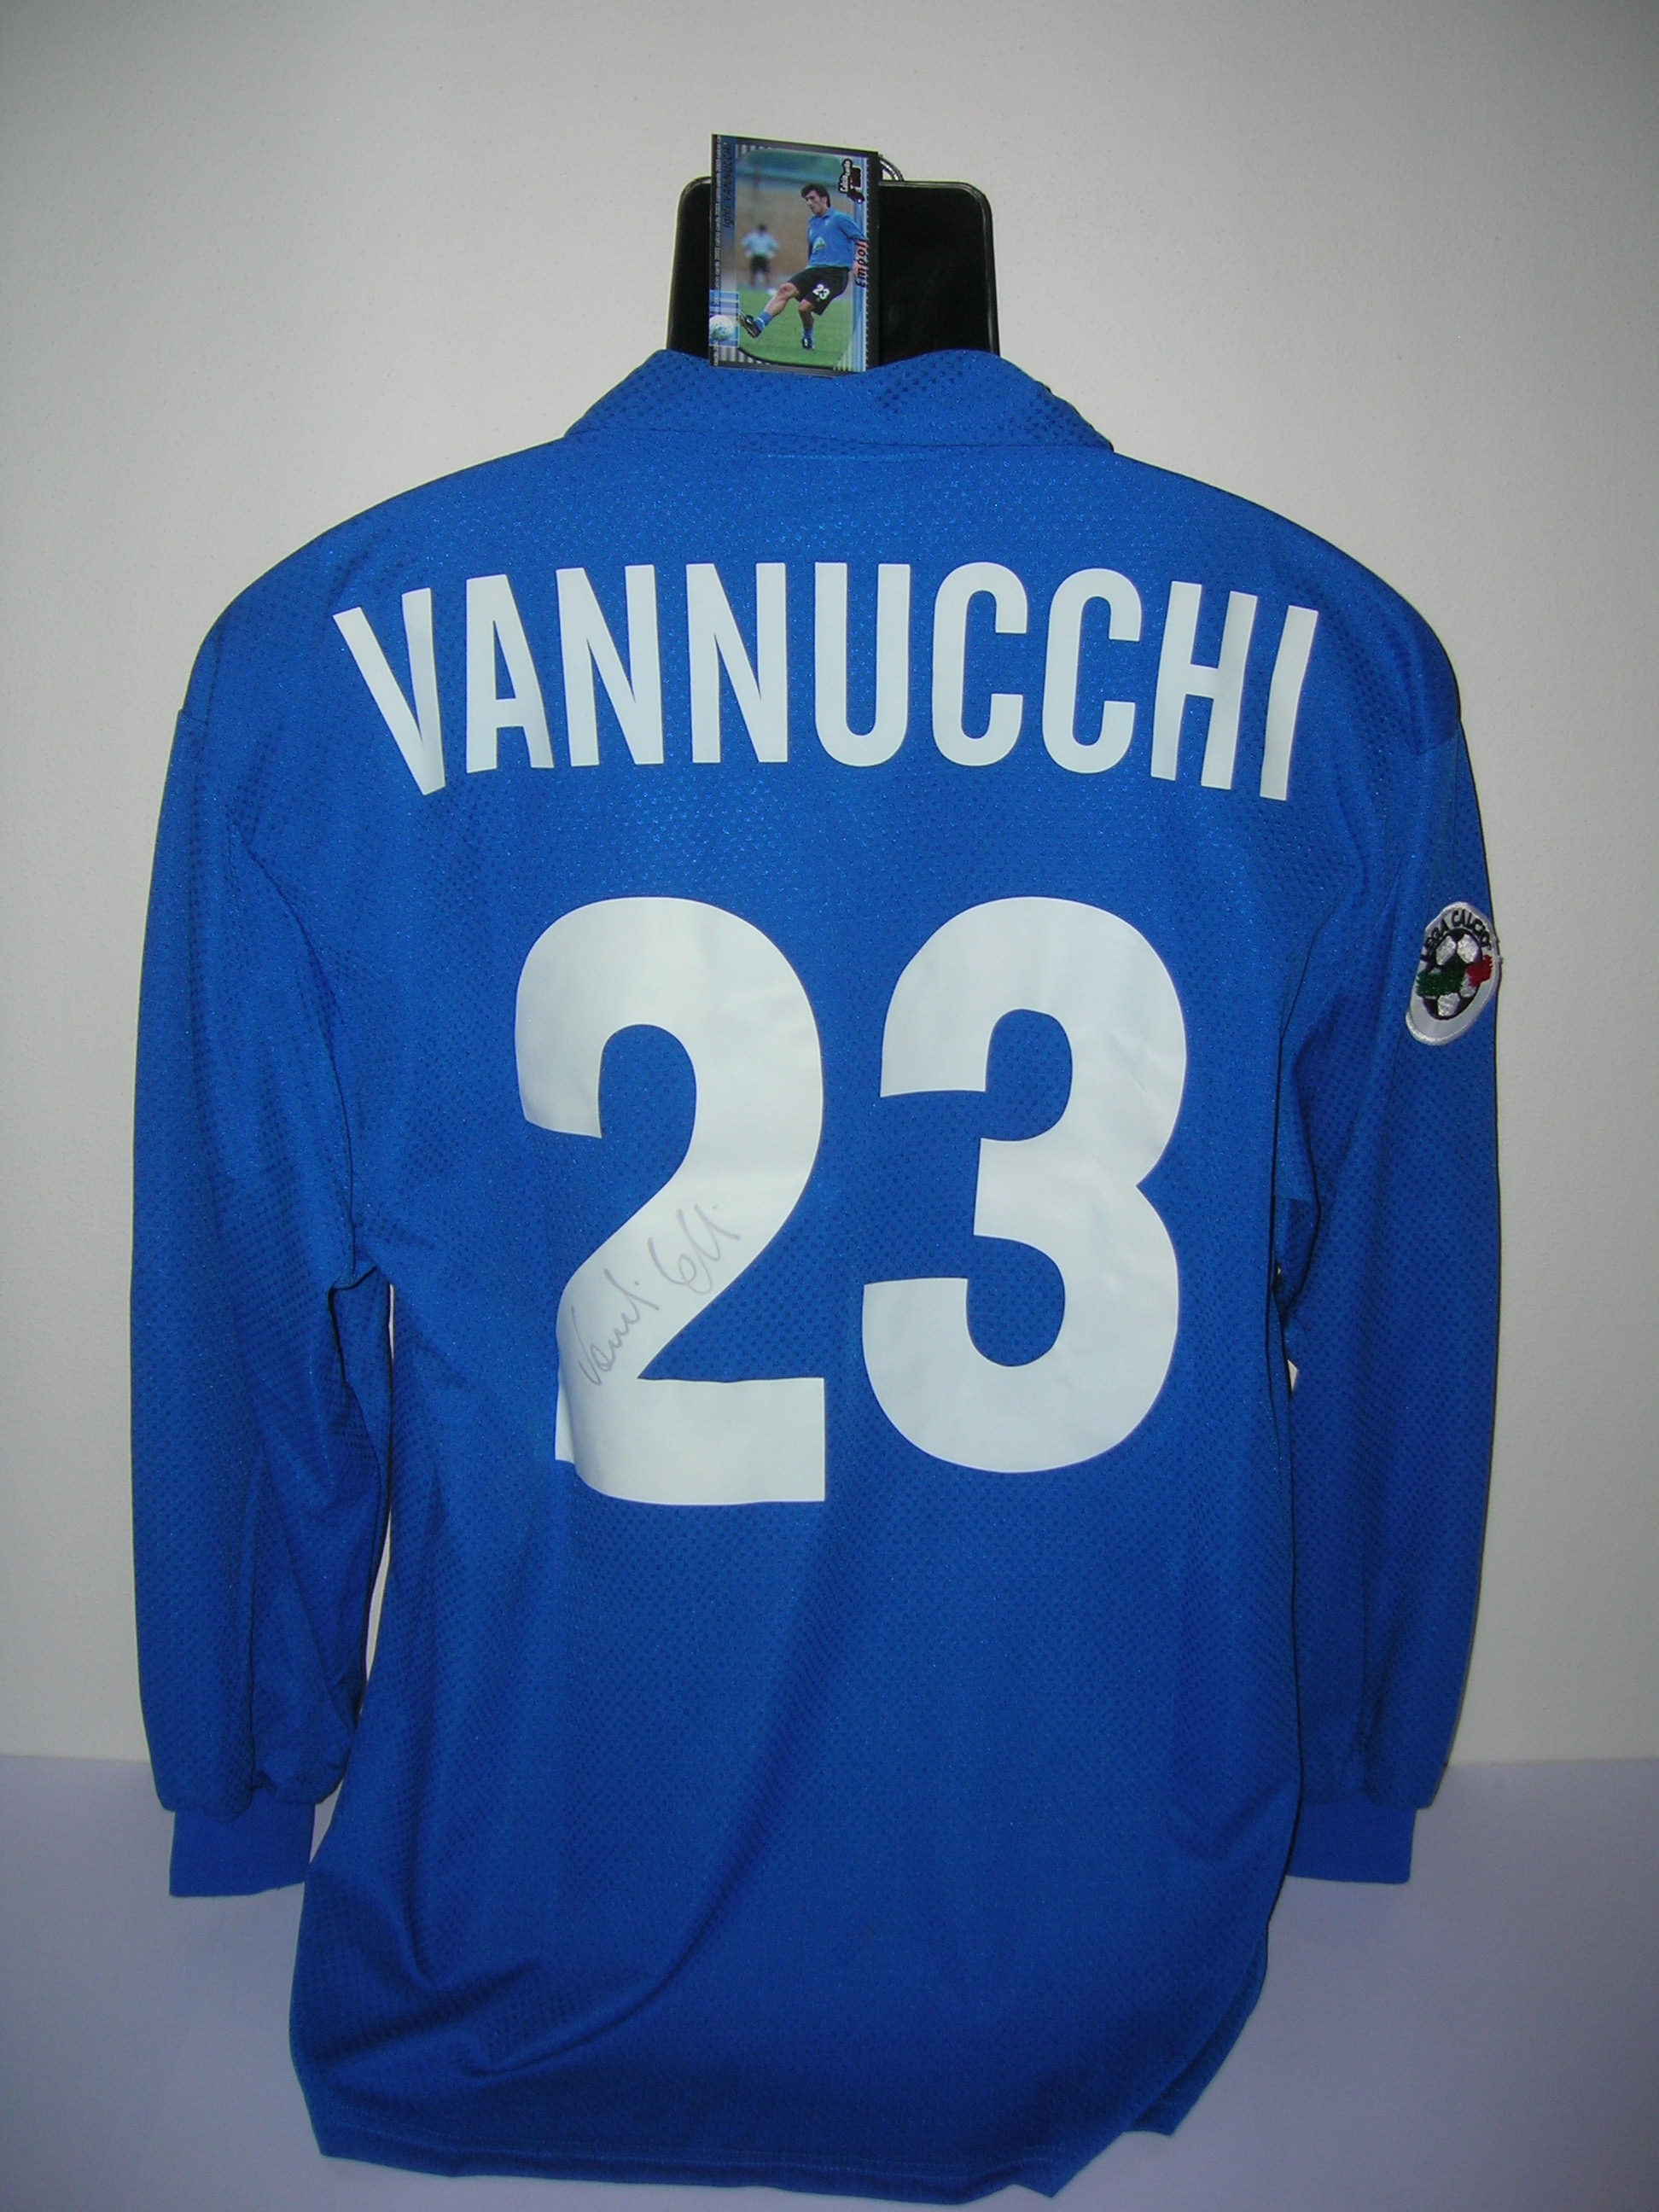 Empoli  Vannucchi  23-B  